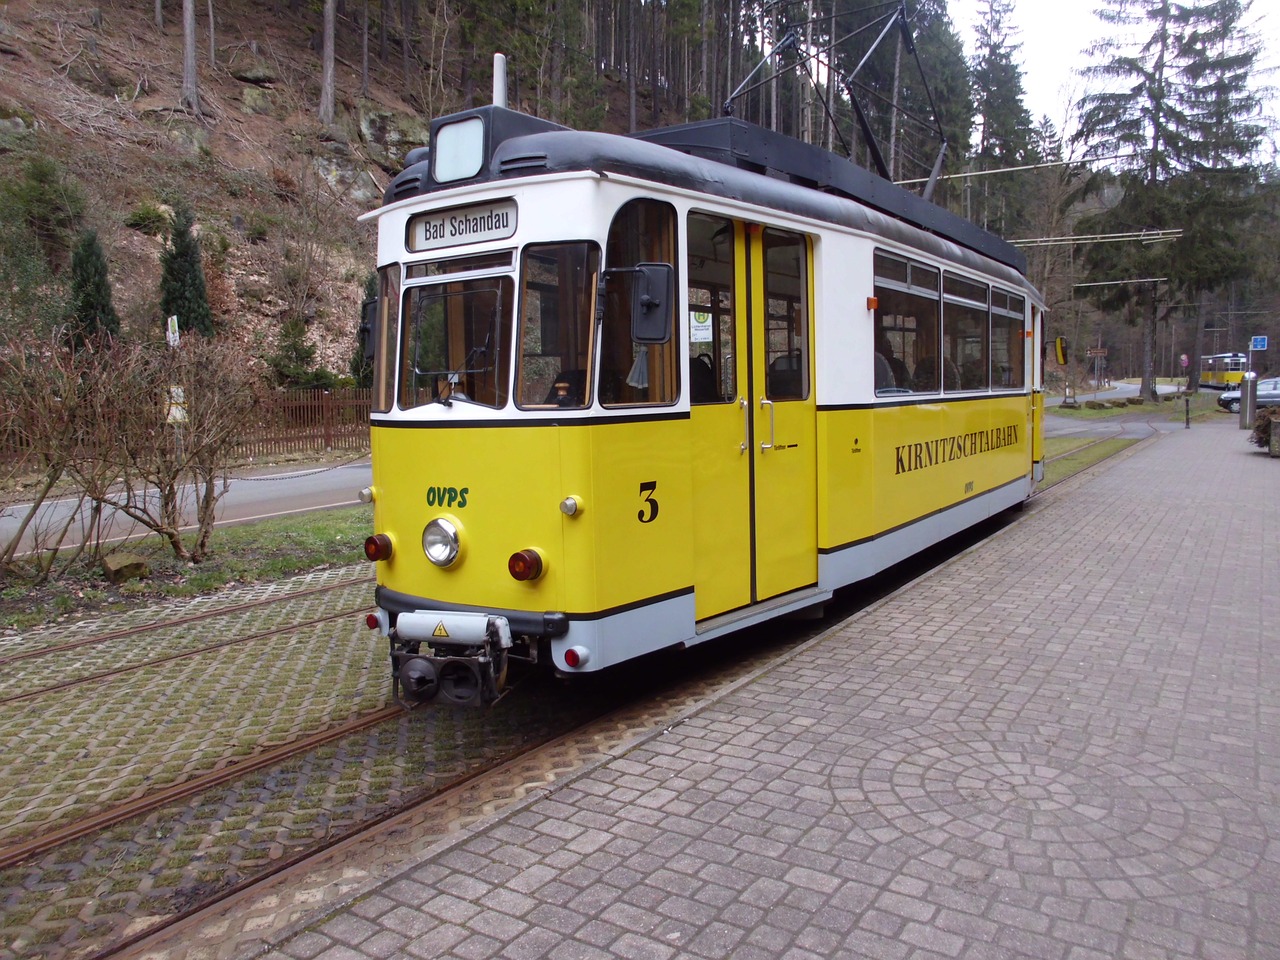 Kirnitzschtalbahn, Blogas Schandau, Saksonijos Šveicarija, Nemokamos Nuotraukos,  Nemokama Licenzija